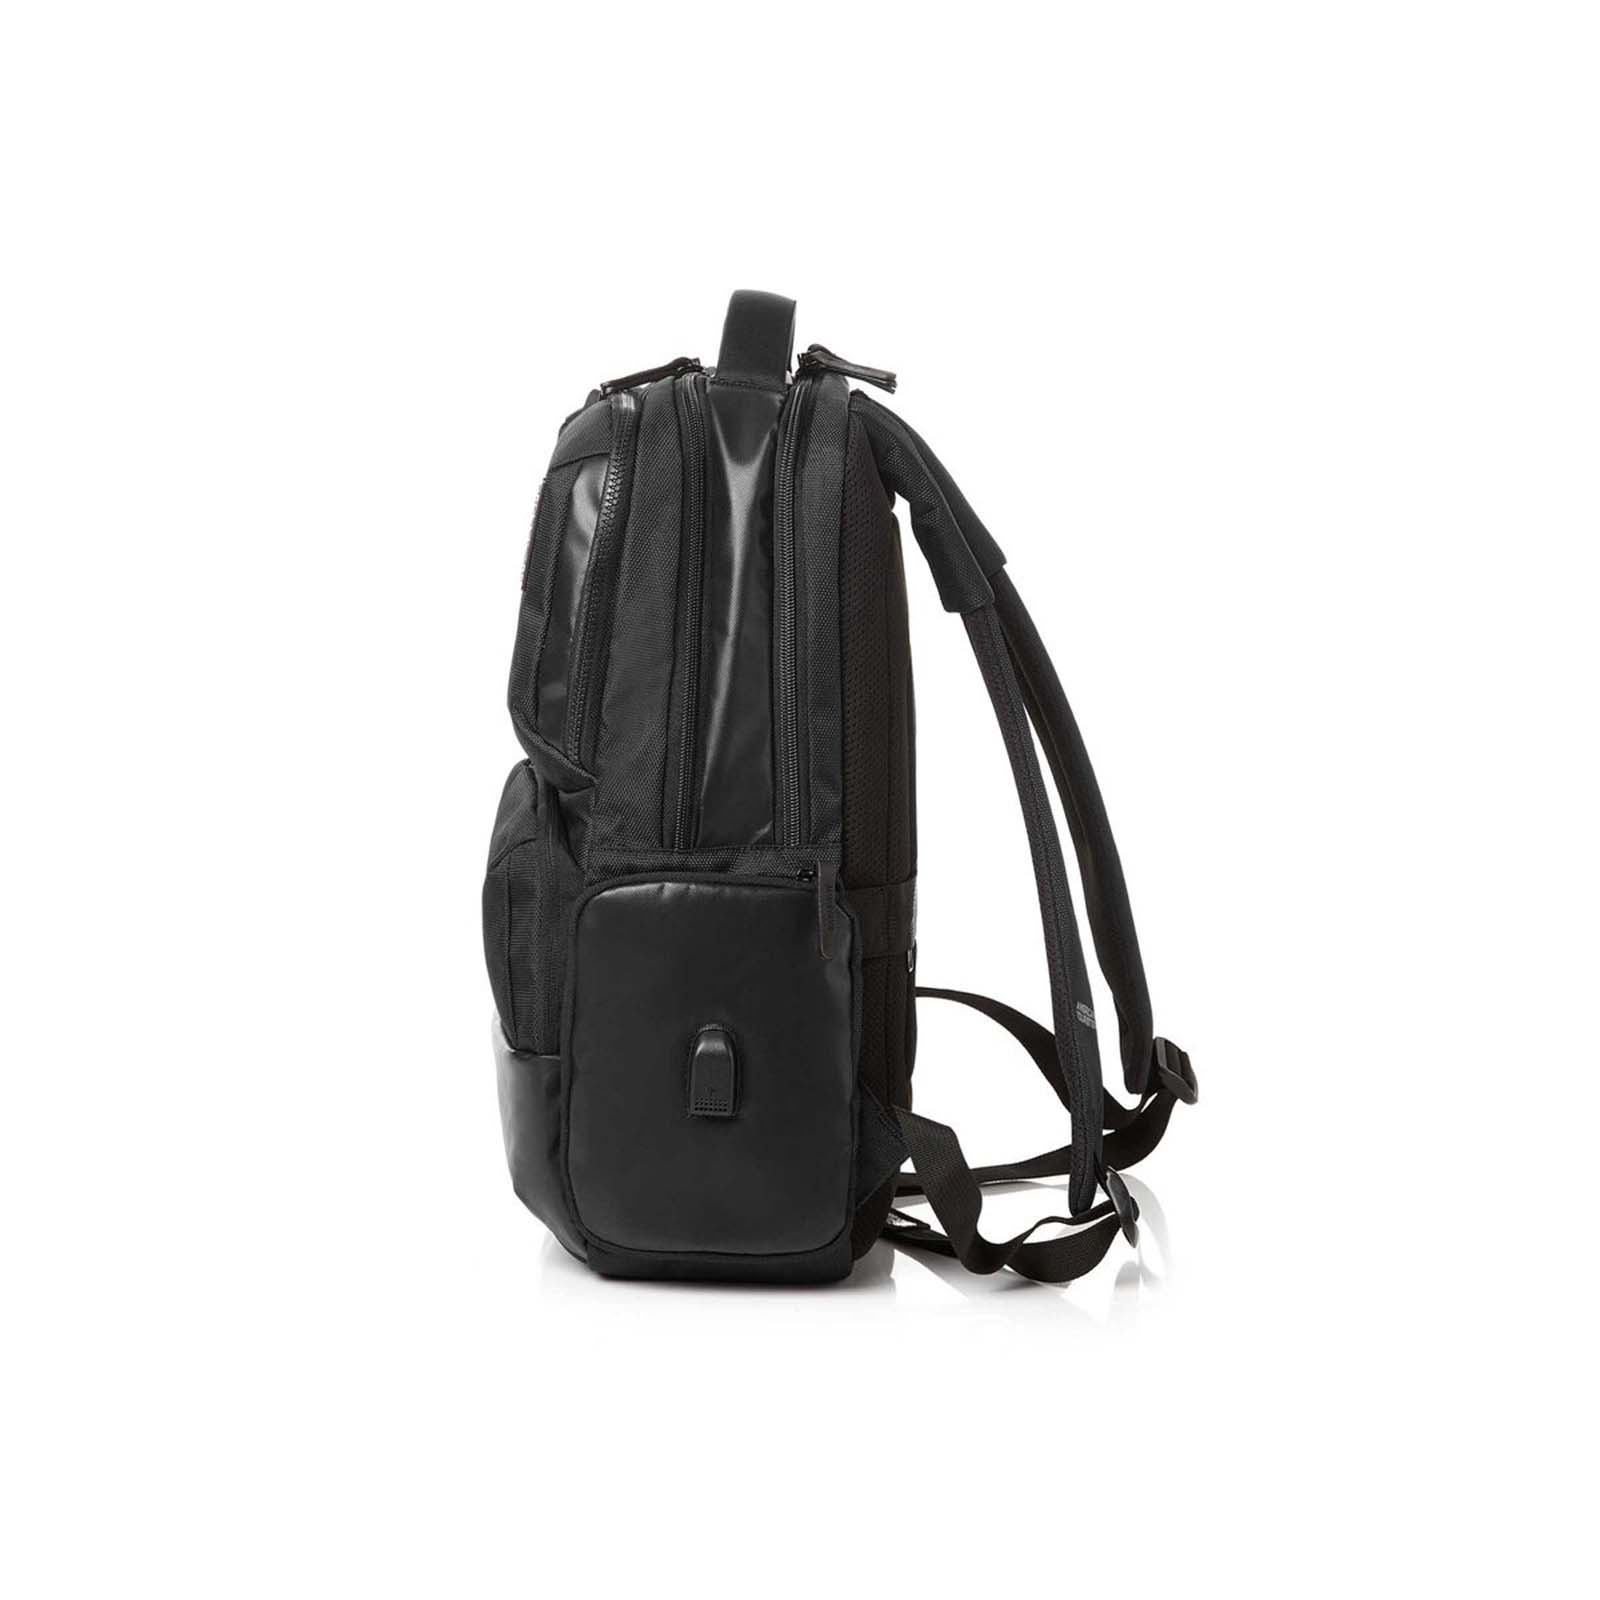 American-Tourister-Zork-15-Inch-Laptop-Backpack-Black-Side-Port